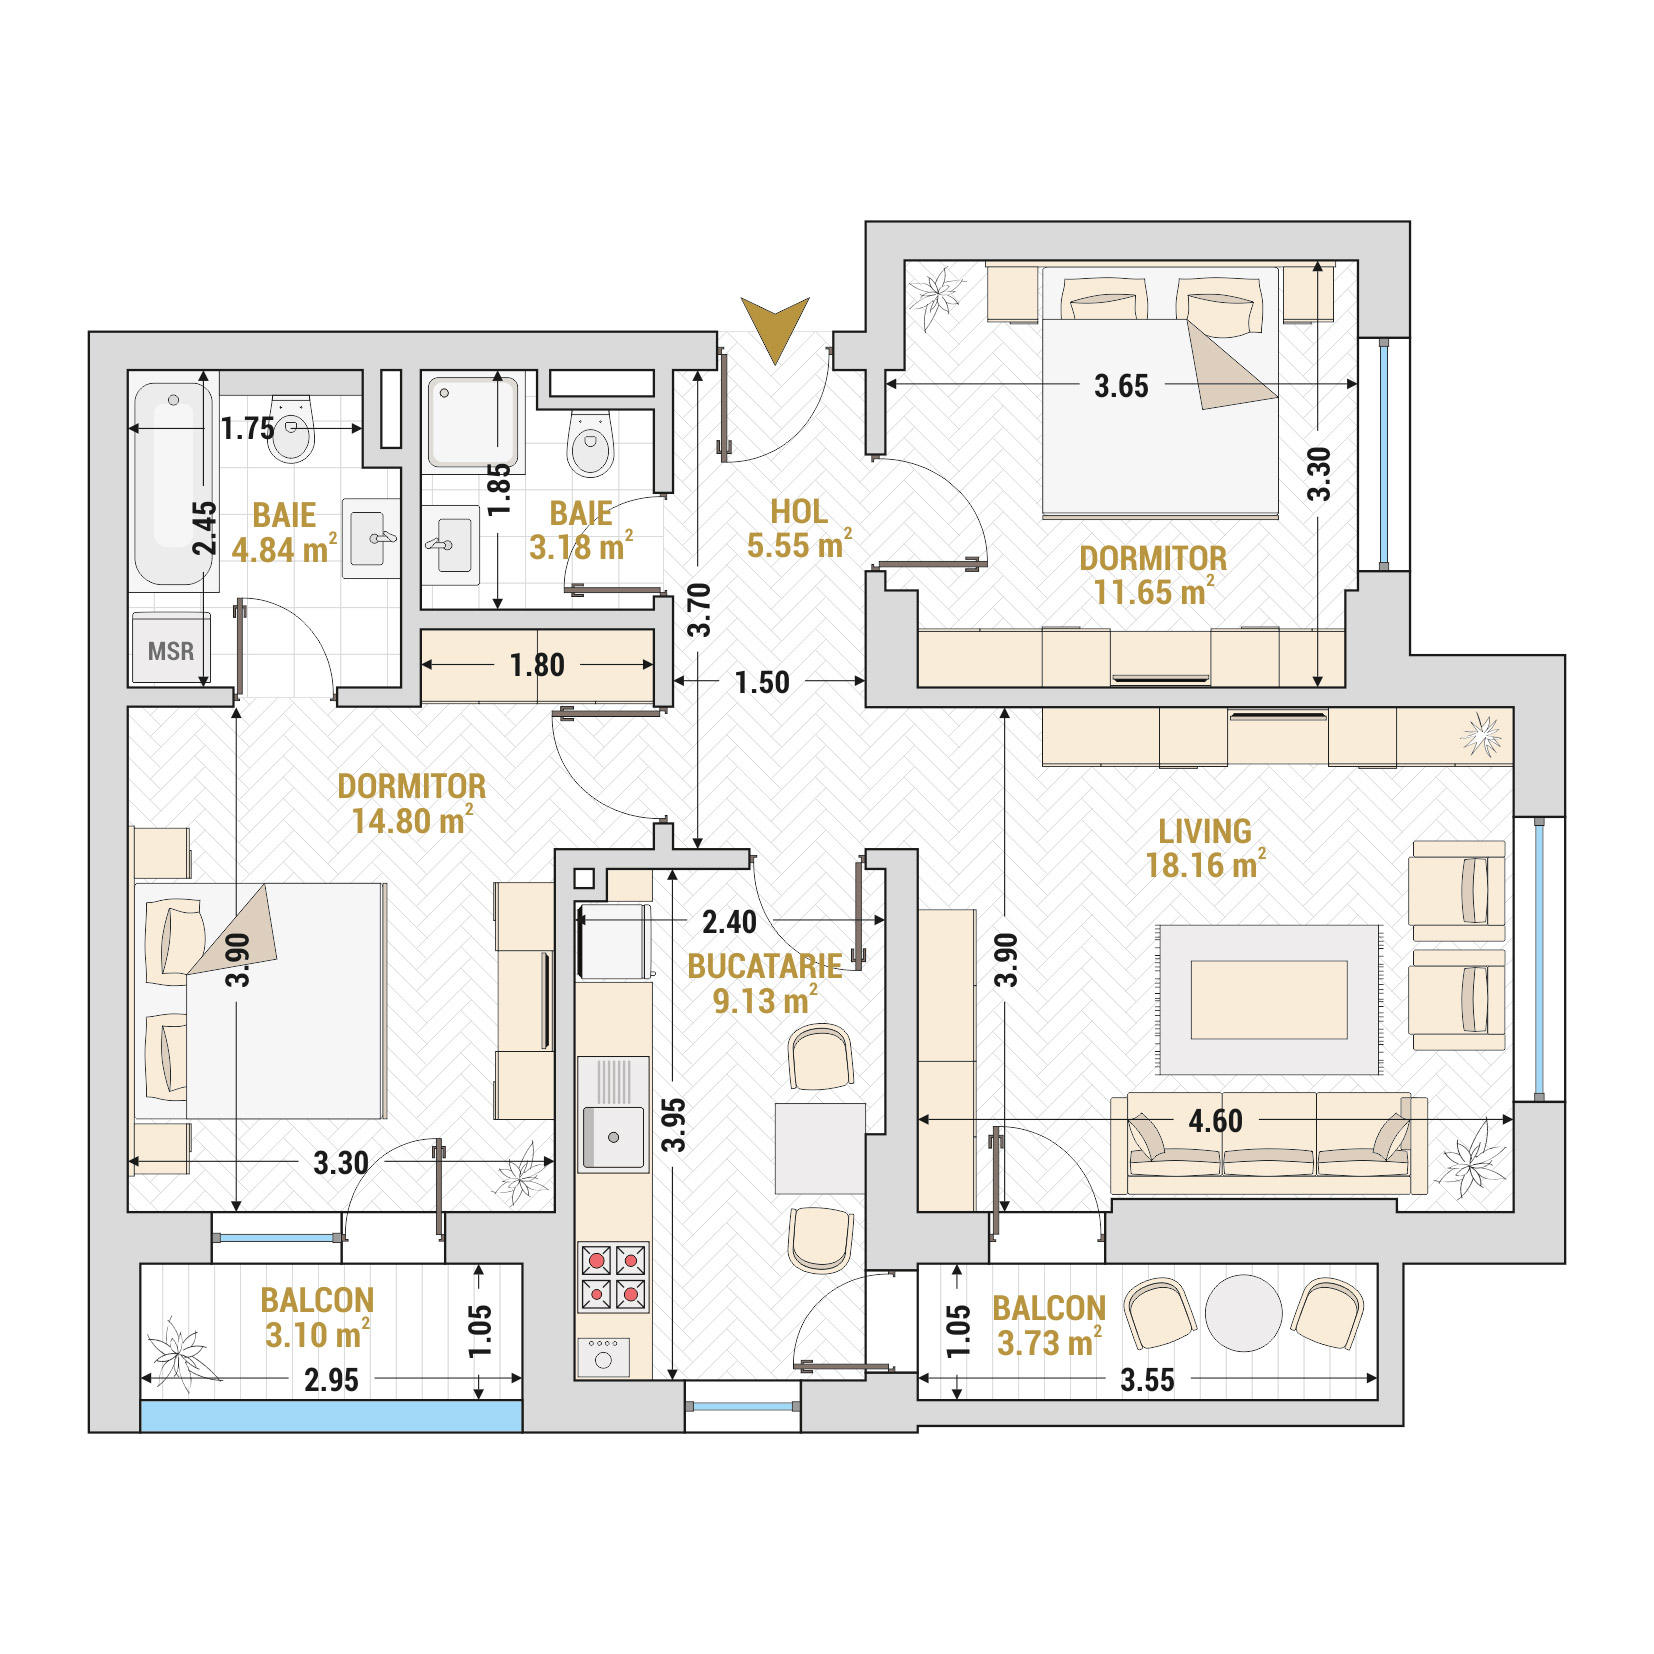 Apartament 3 Camere Tip 1 Corp 2 - Drumul Taberei Residence - Apartamente de vanzare Bucuresti - Suprafata utila totala - 74.14 mp